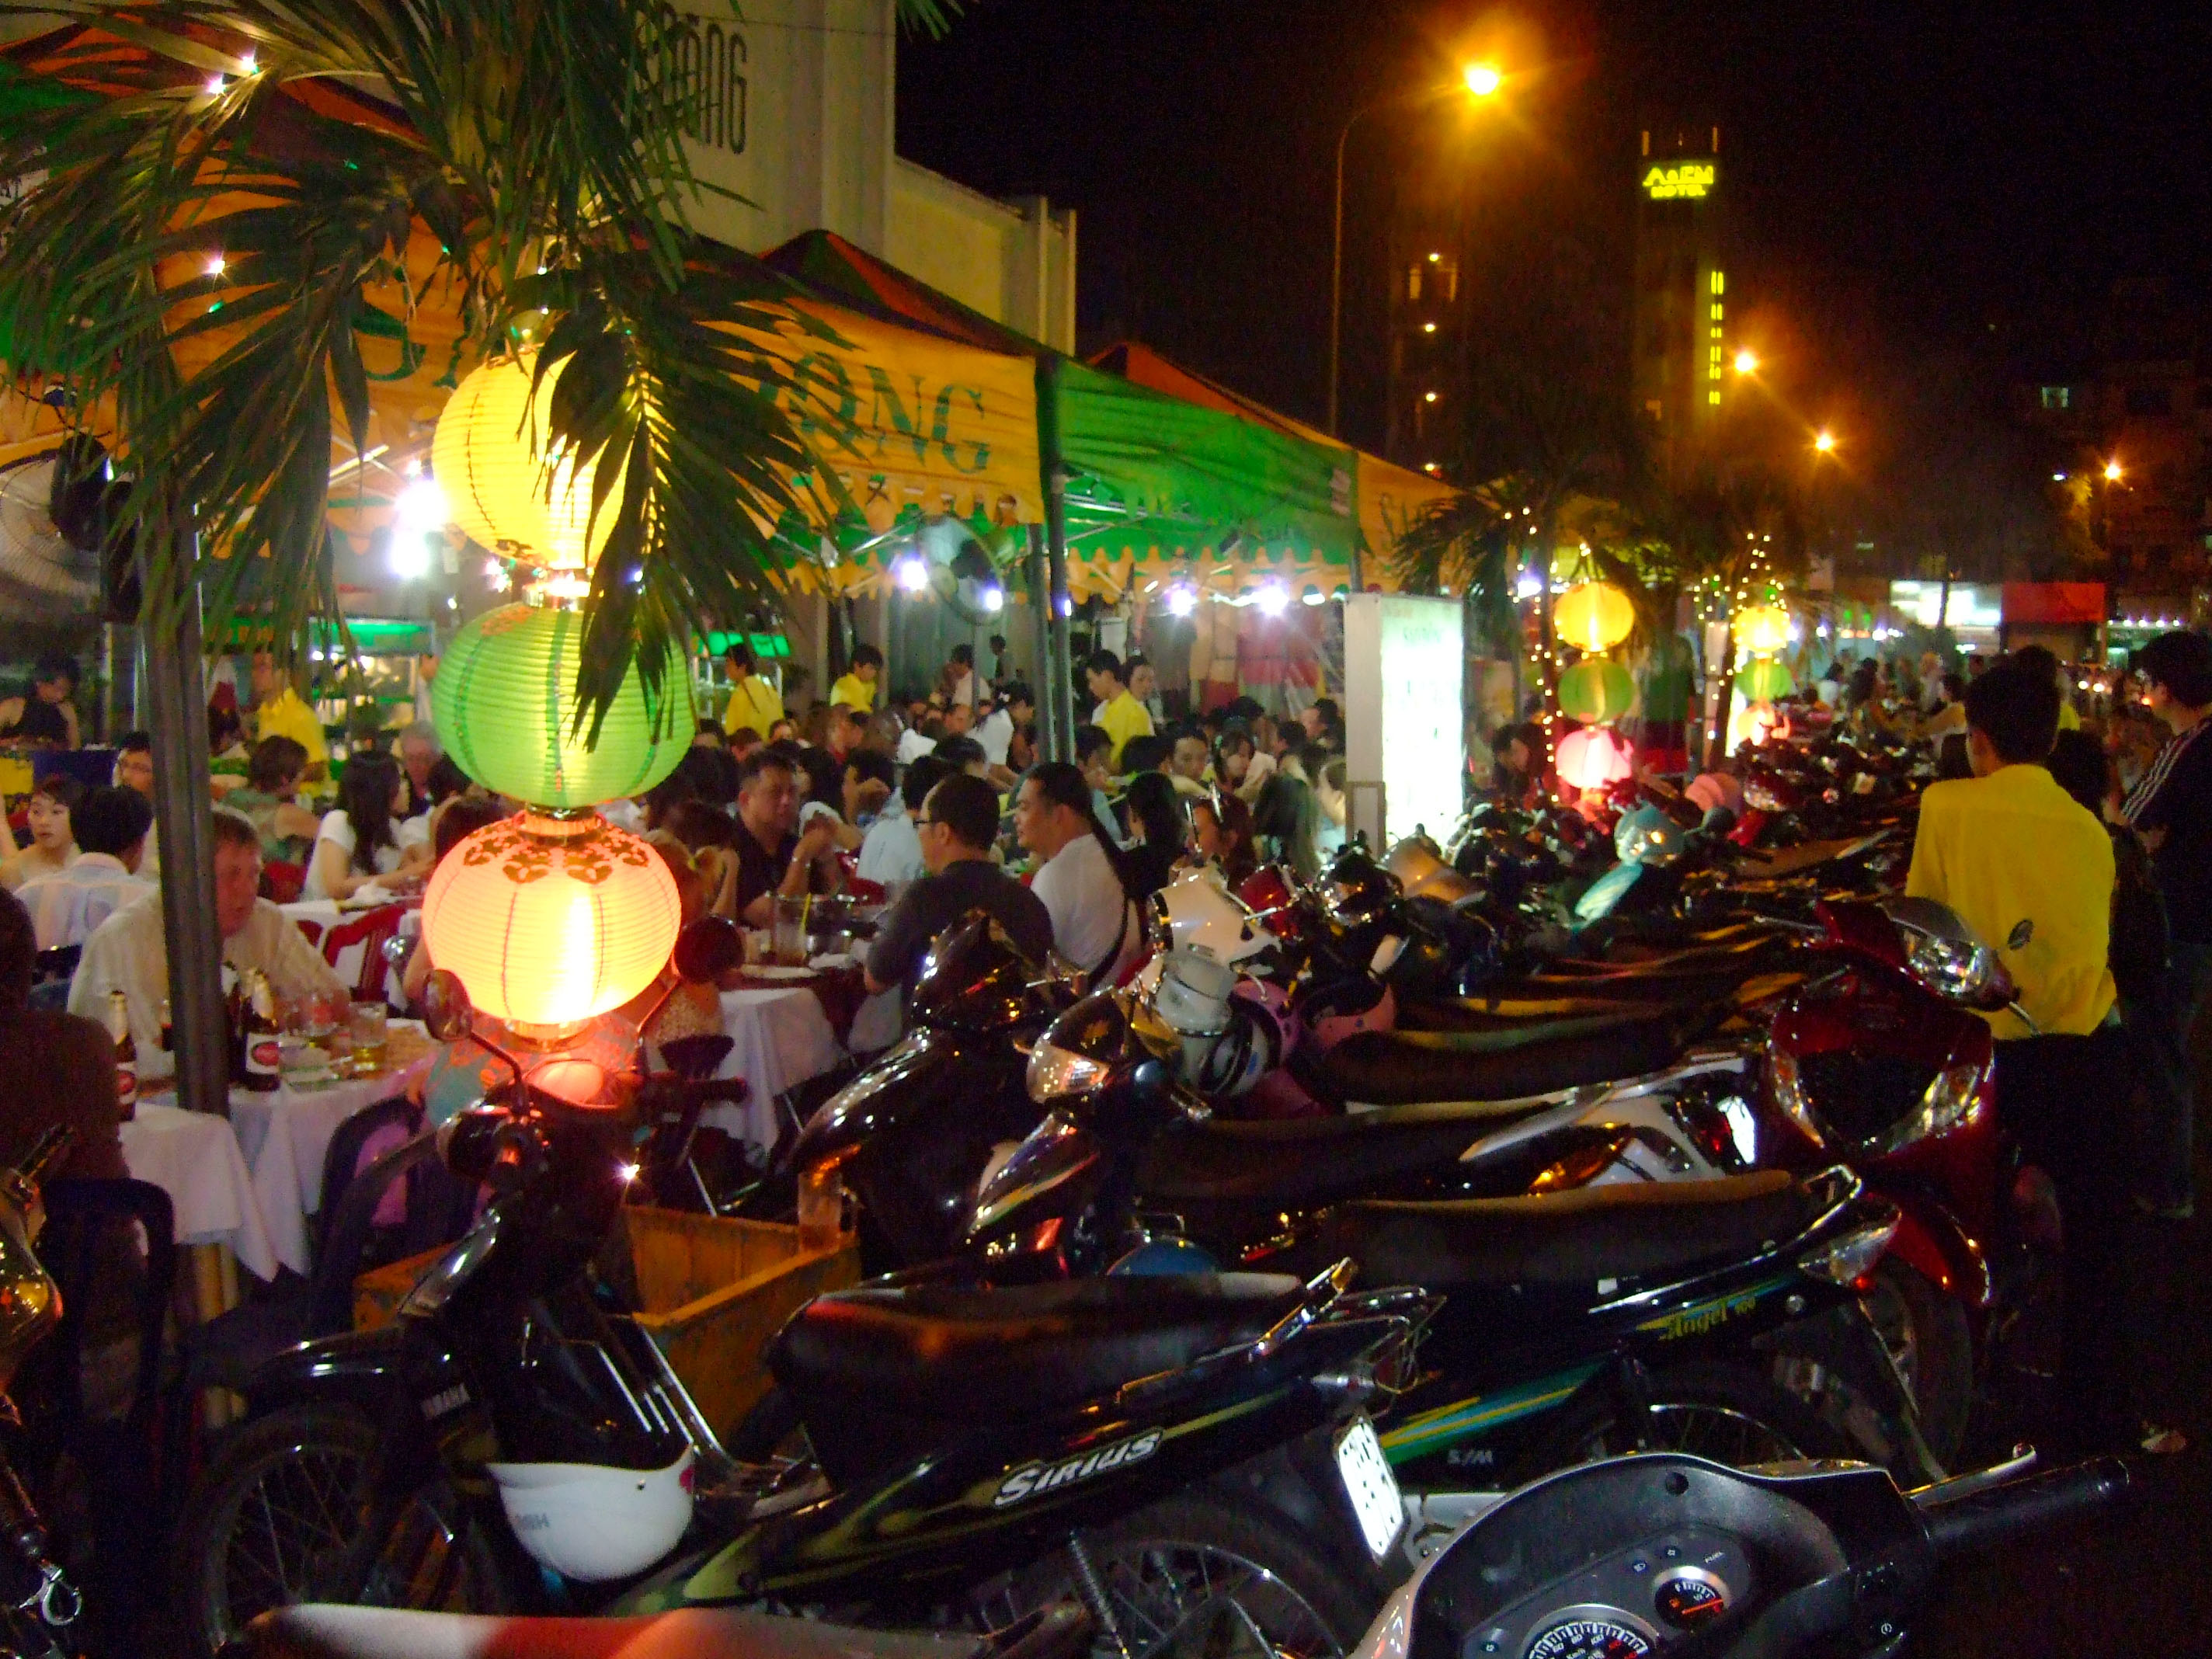 Vietnam Ho Chi Minh City Saigon street scenes everyday night life Feb 2009 11